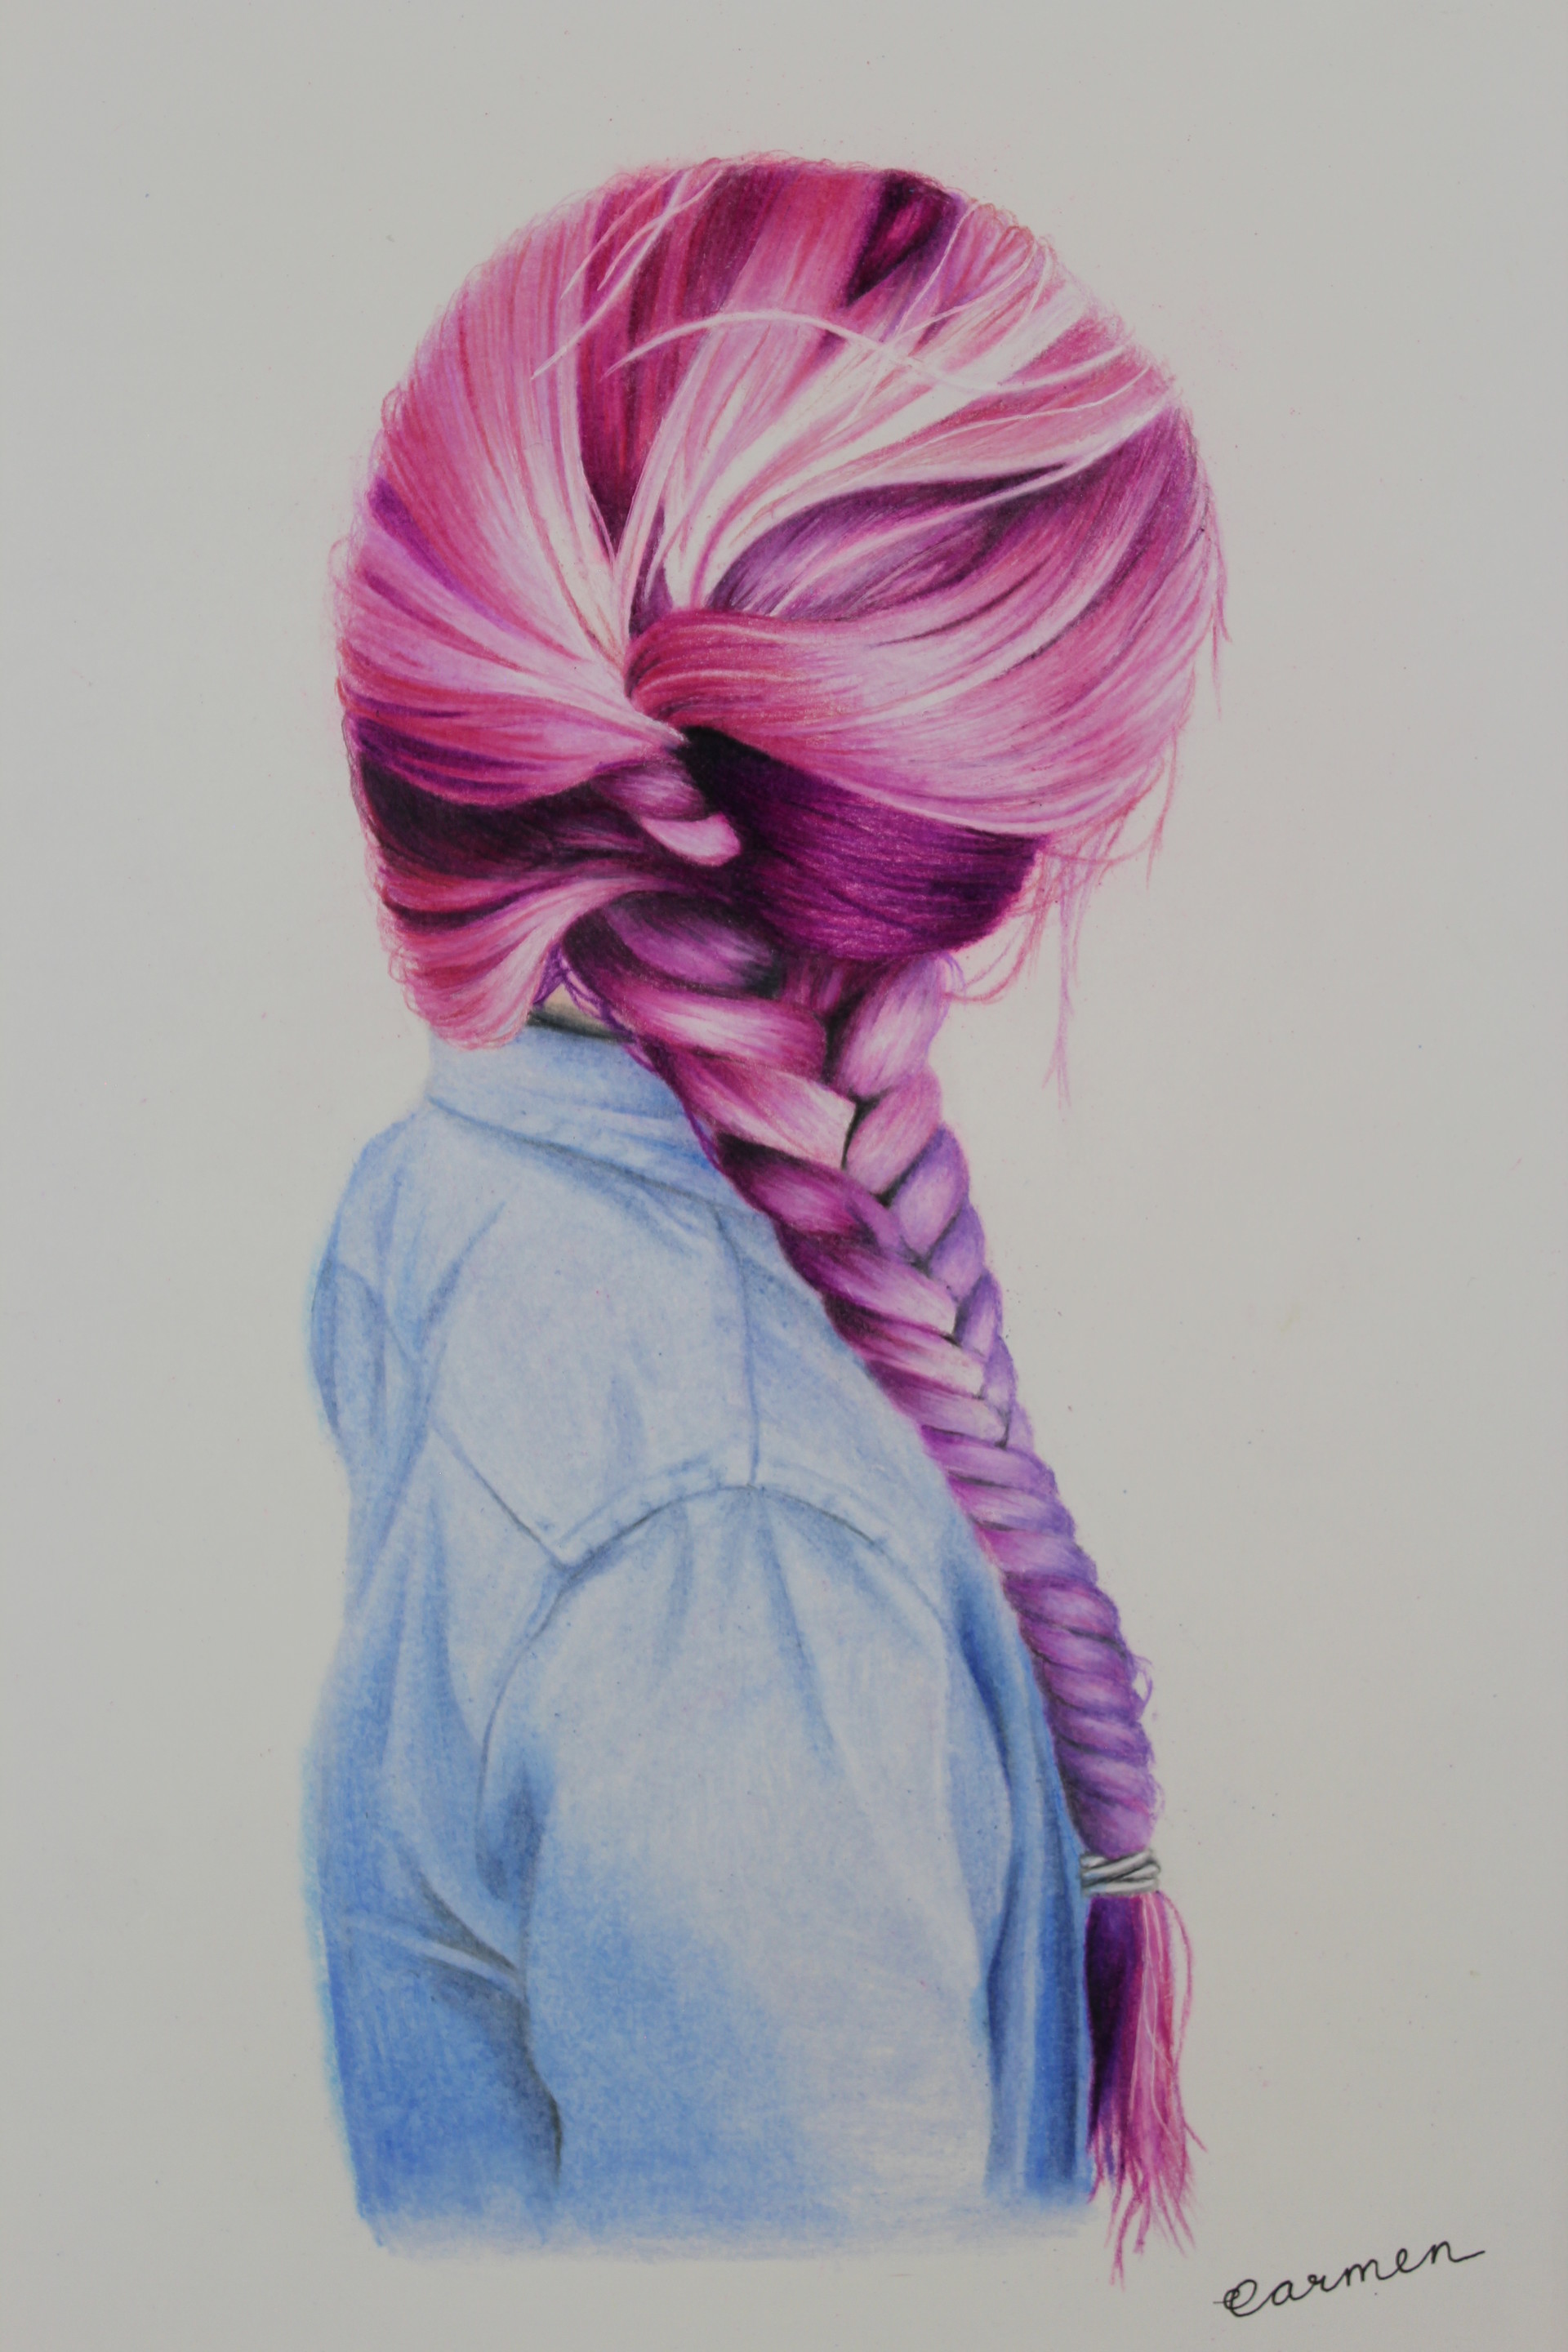 ArtStation - Colored Hair Drawing